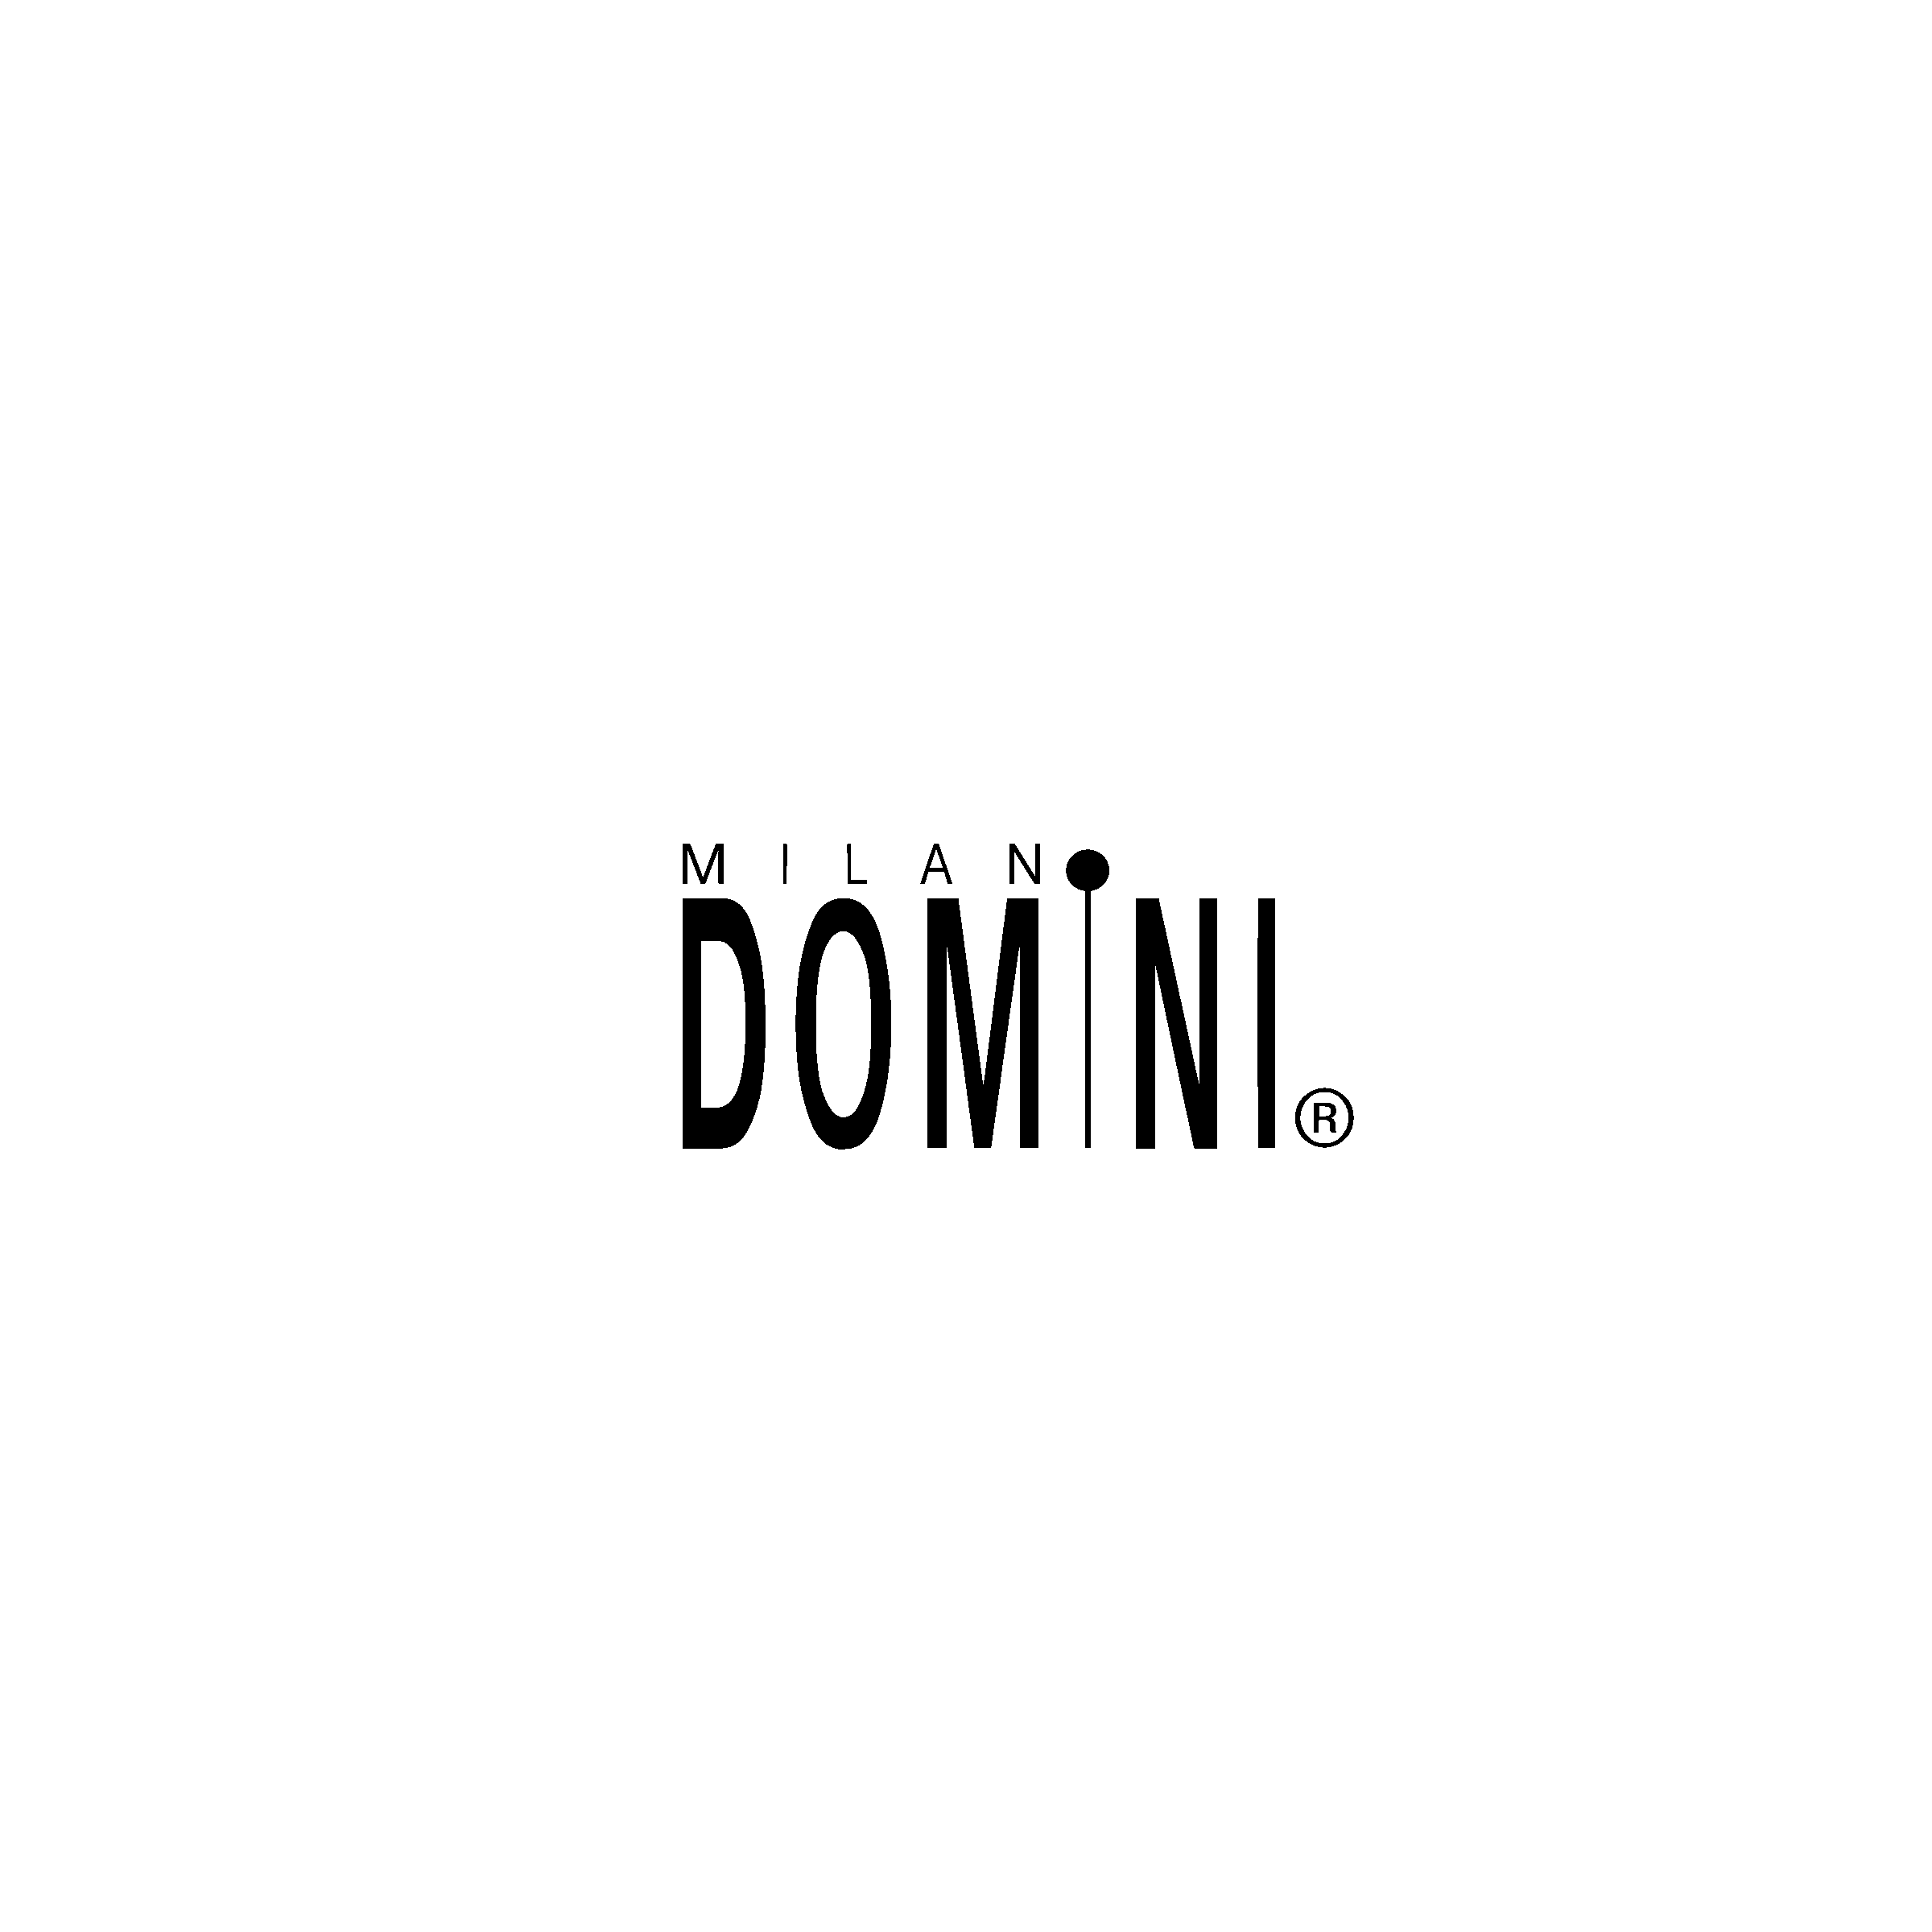 Domini Logo - Domini Logo PNG Transparent & SVG Vector - Freebie Supply